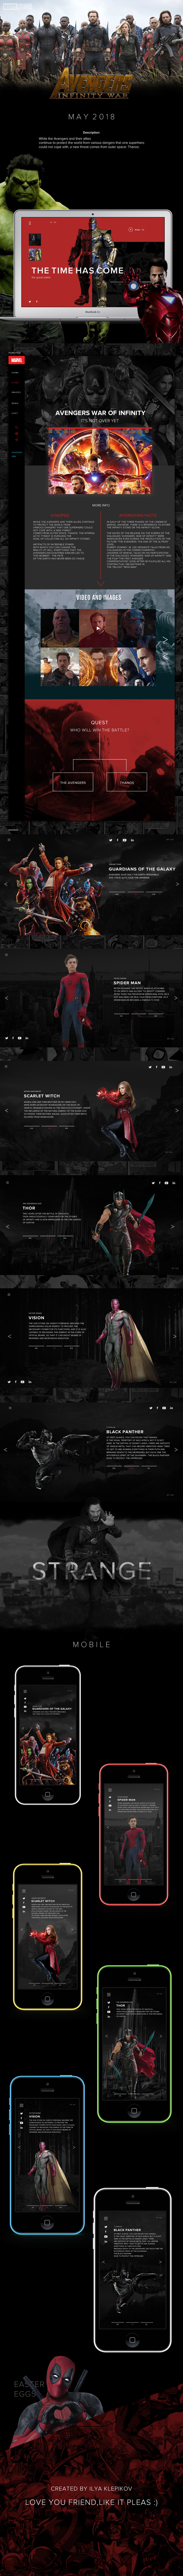 marvel Infinity war banner Thanos comics ux UI Cinema geek superheroes